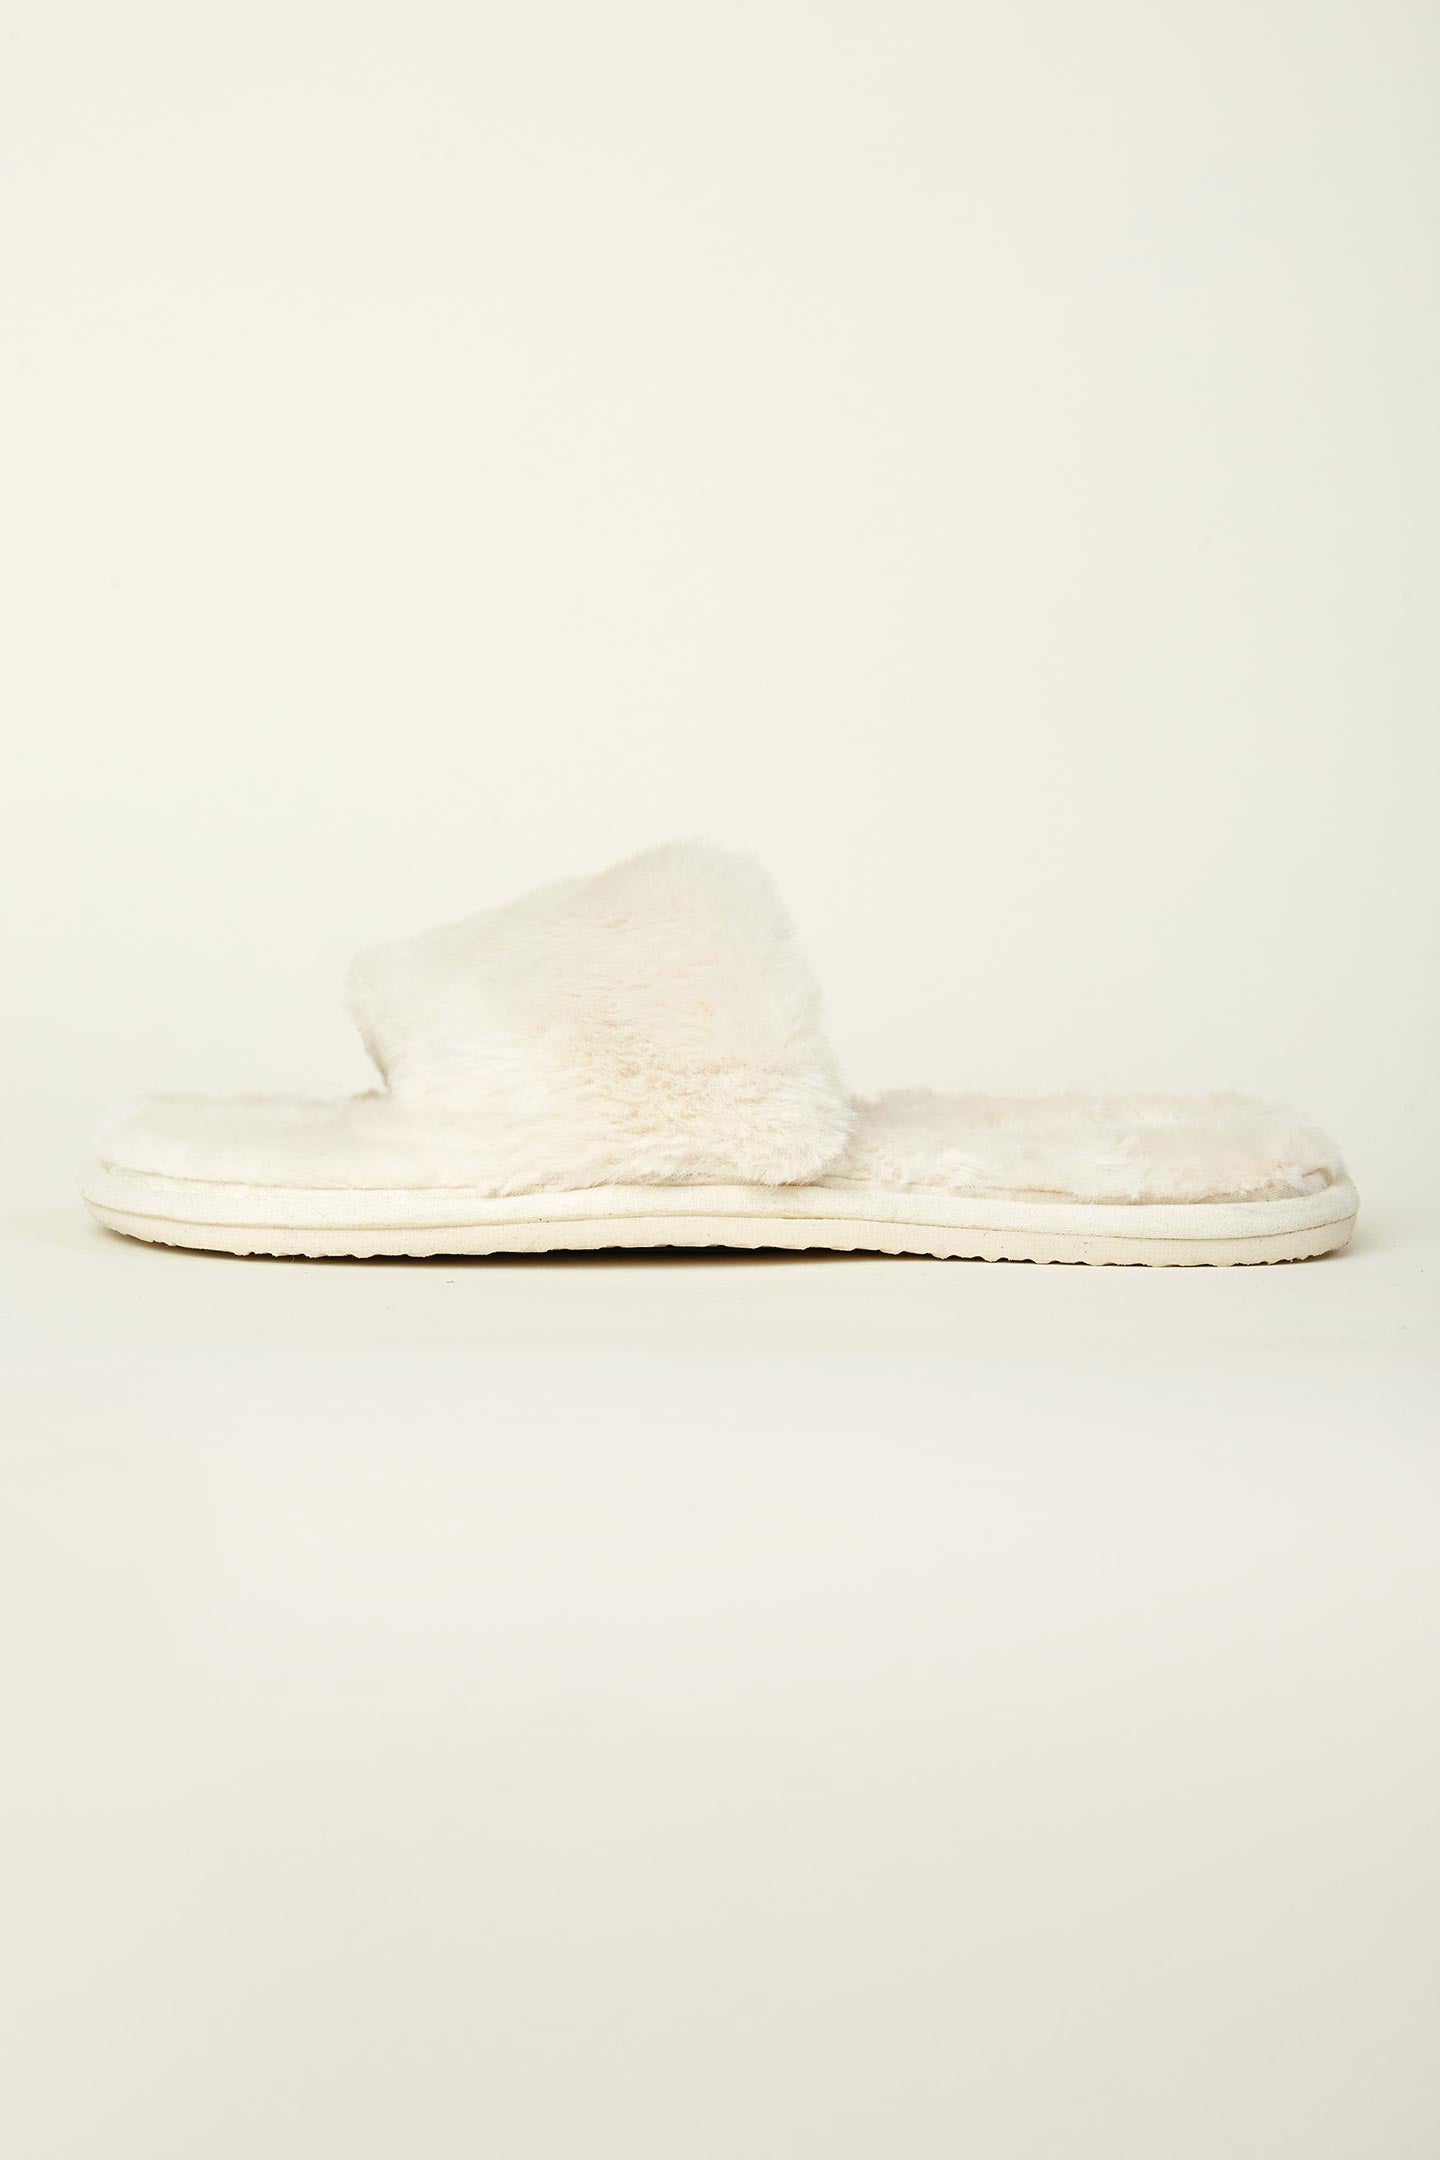 sonoma womens slippers